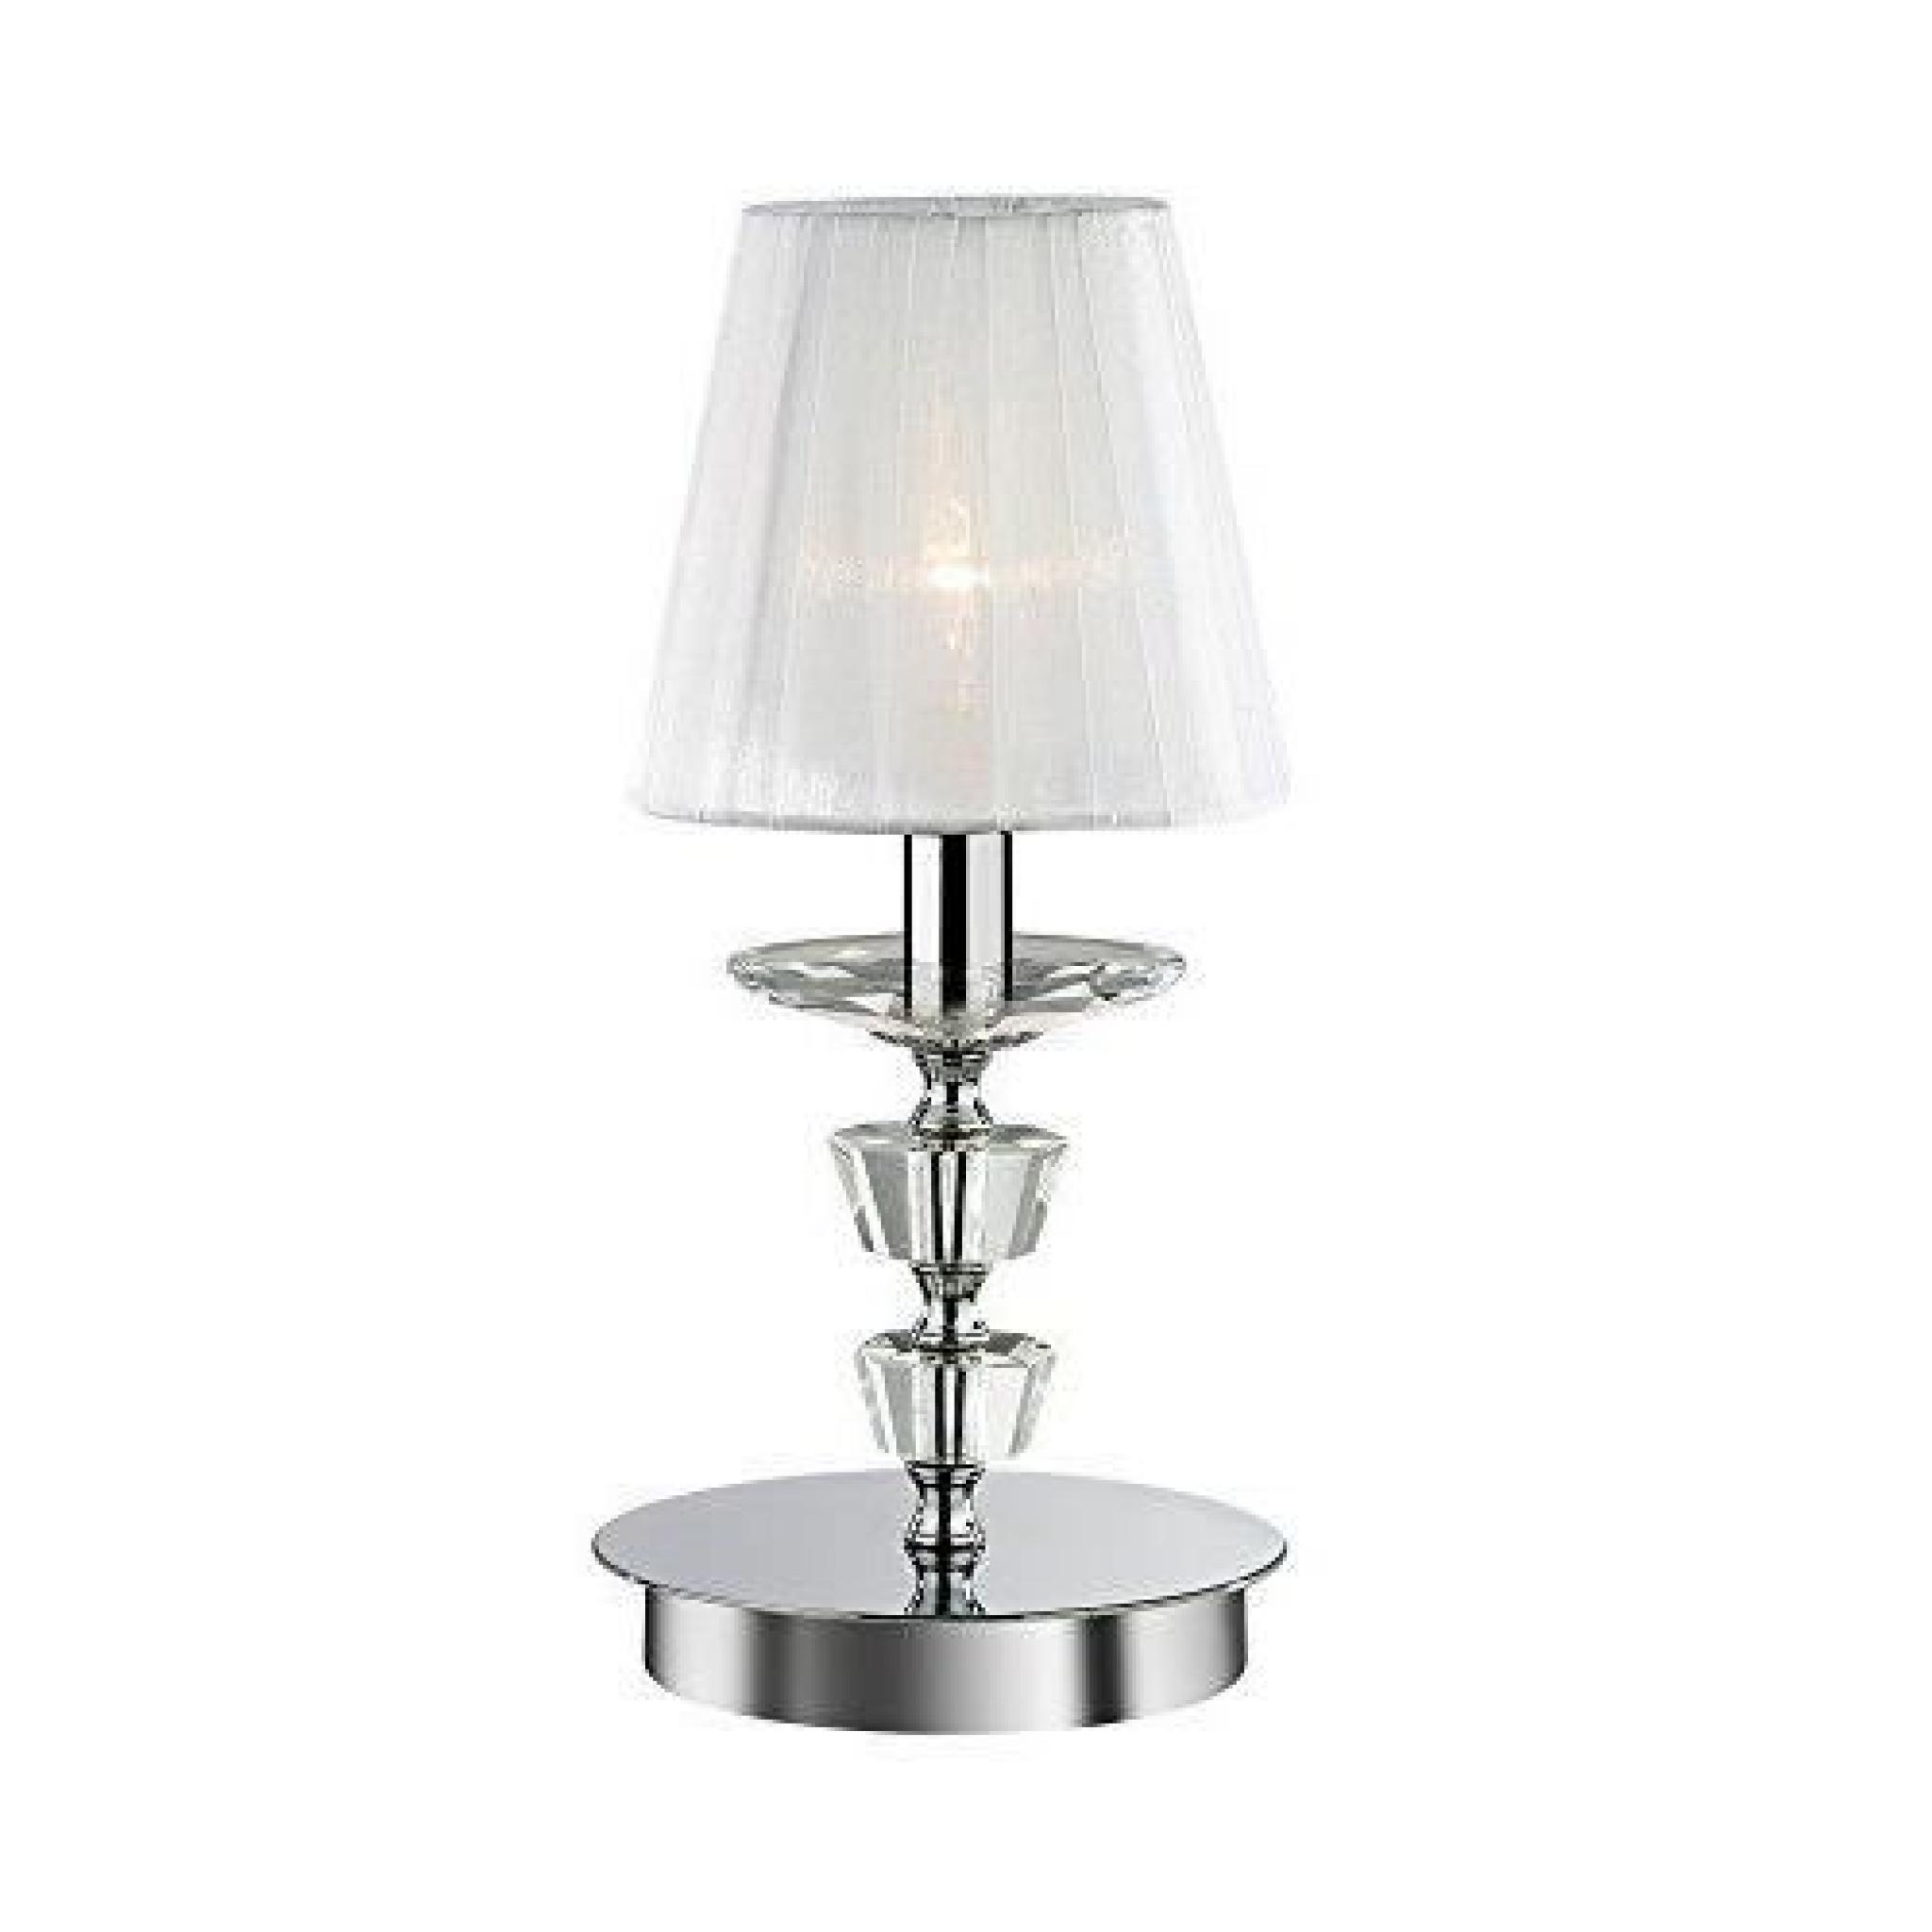 Ideal Lux 059266 Pegaso TL1 Lampe de Table